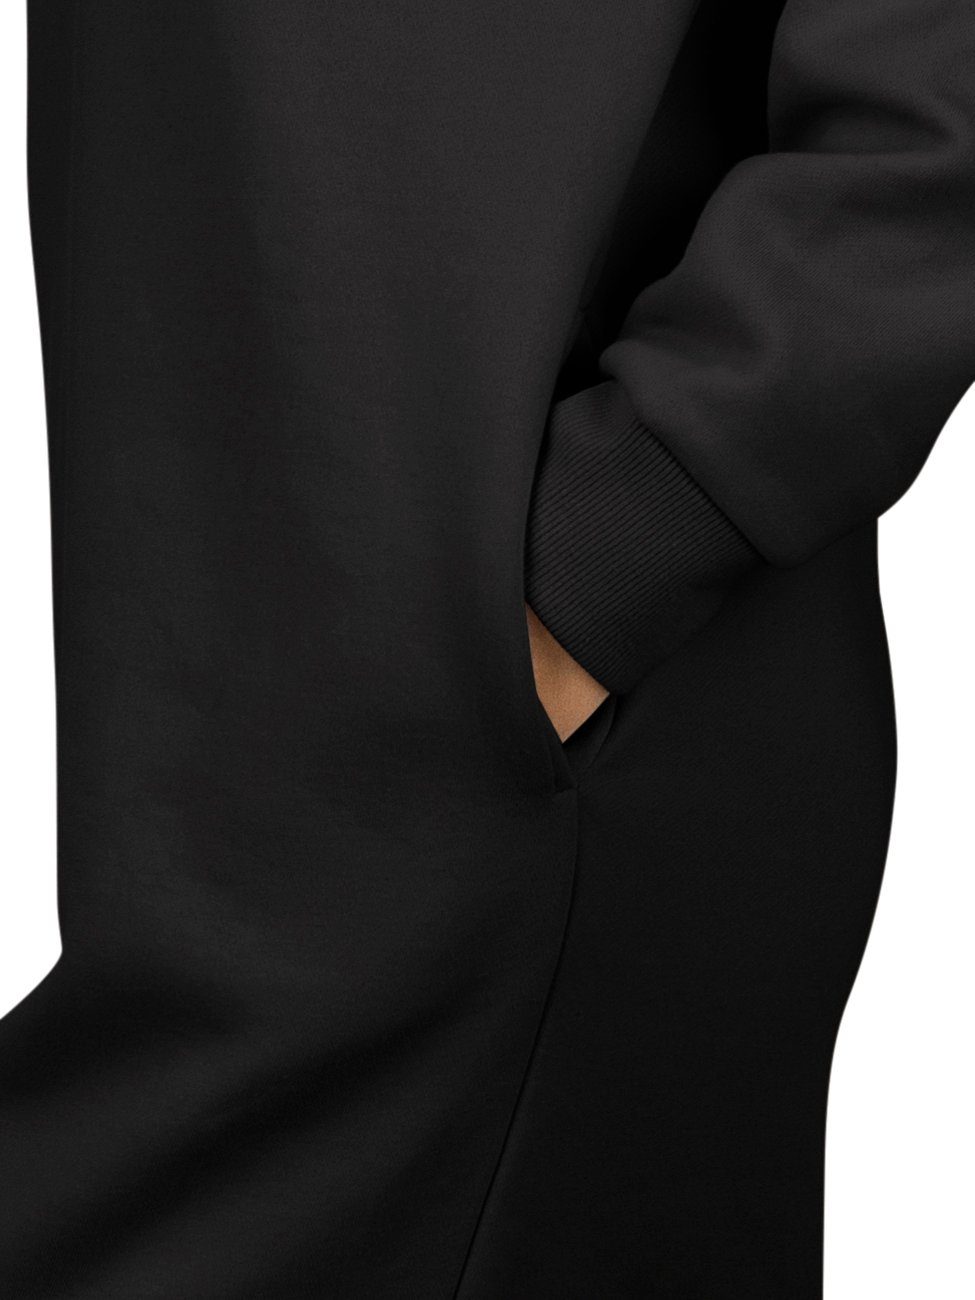 DENIMFY Sweatkleid Damen Kapuzenpullover DFAnna mit Kapuze Black Oversize Freizeitkleid (64000)